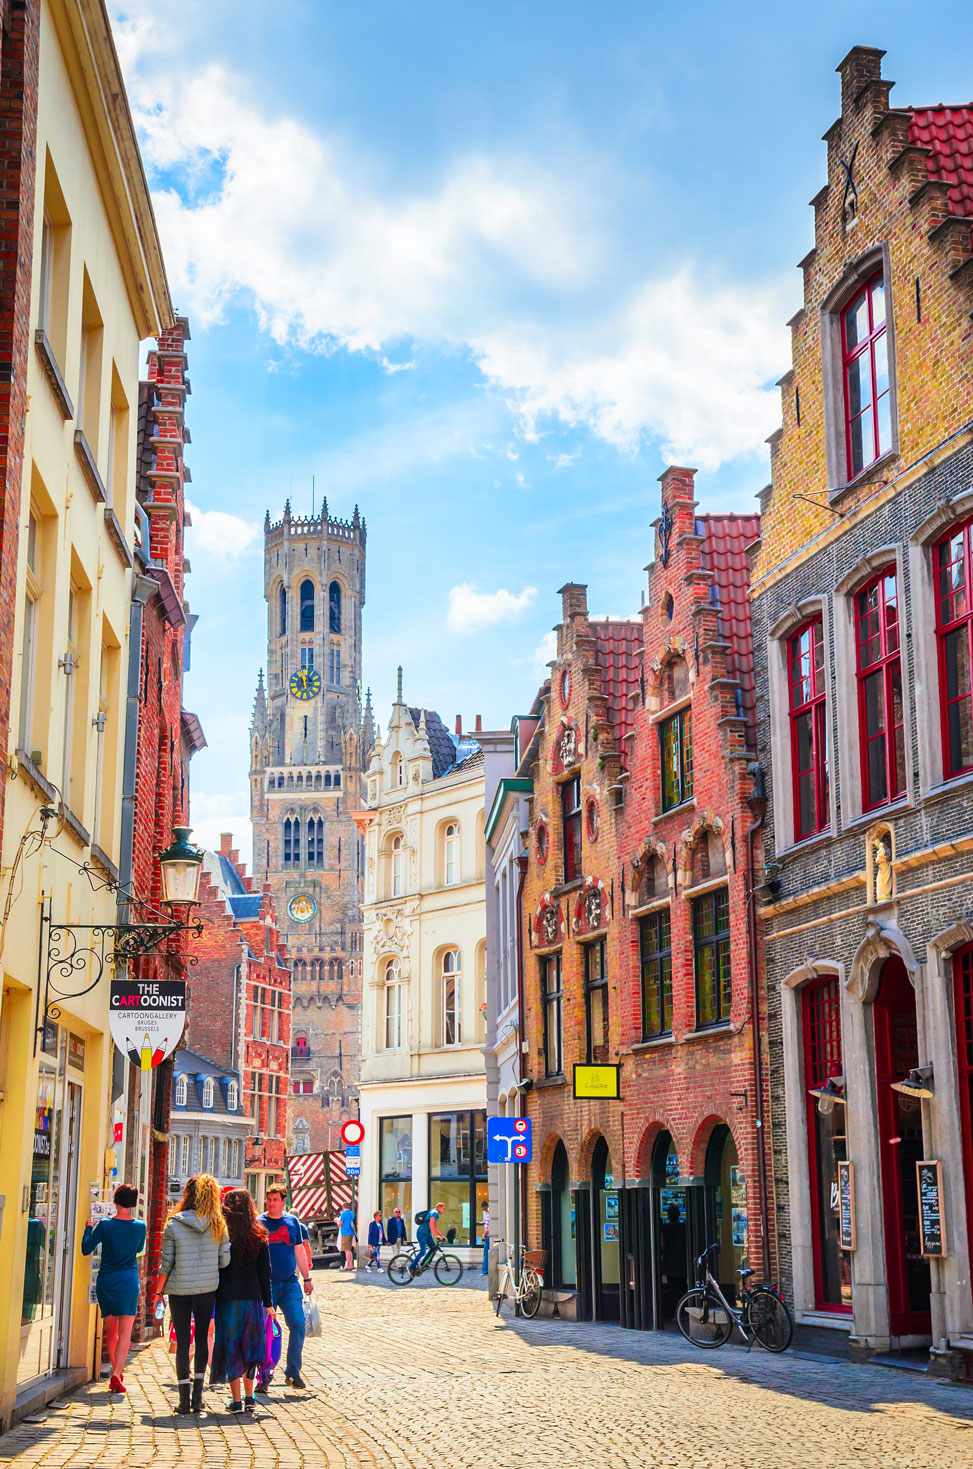 Tourists are returning to Bruges ©Olena Z/Shutterstock